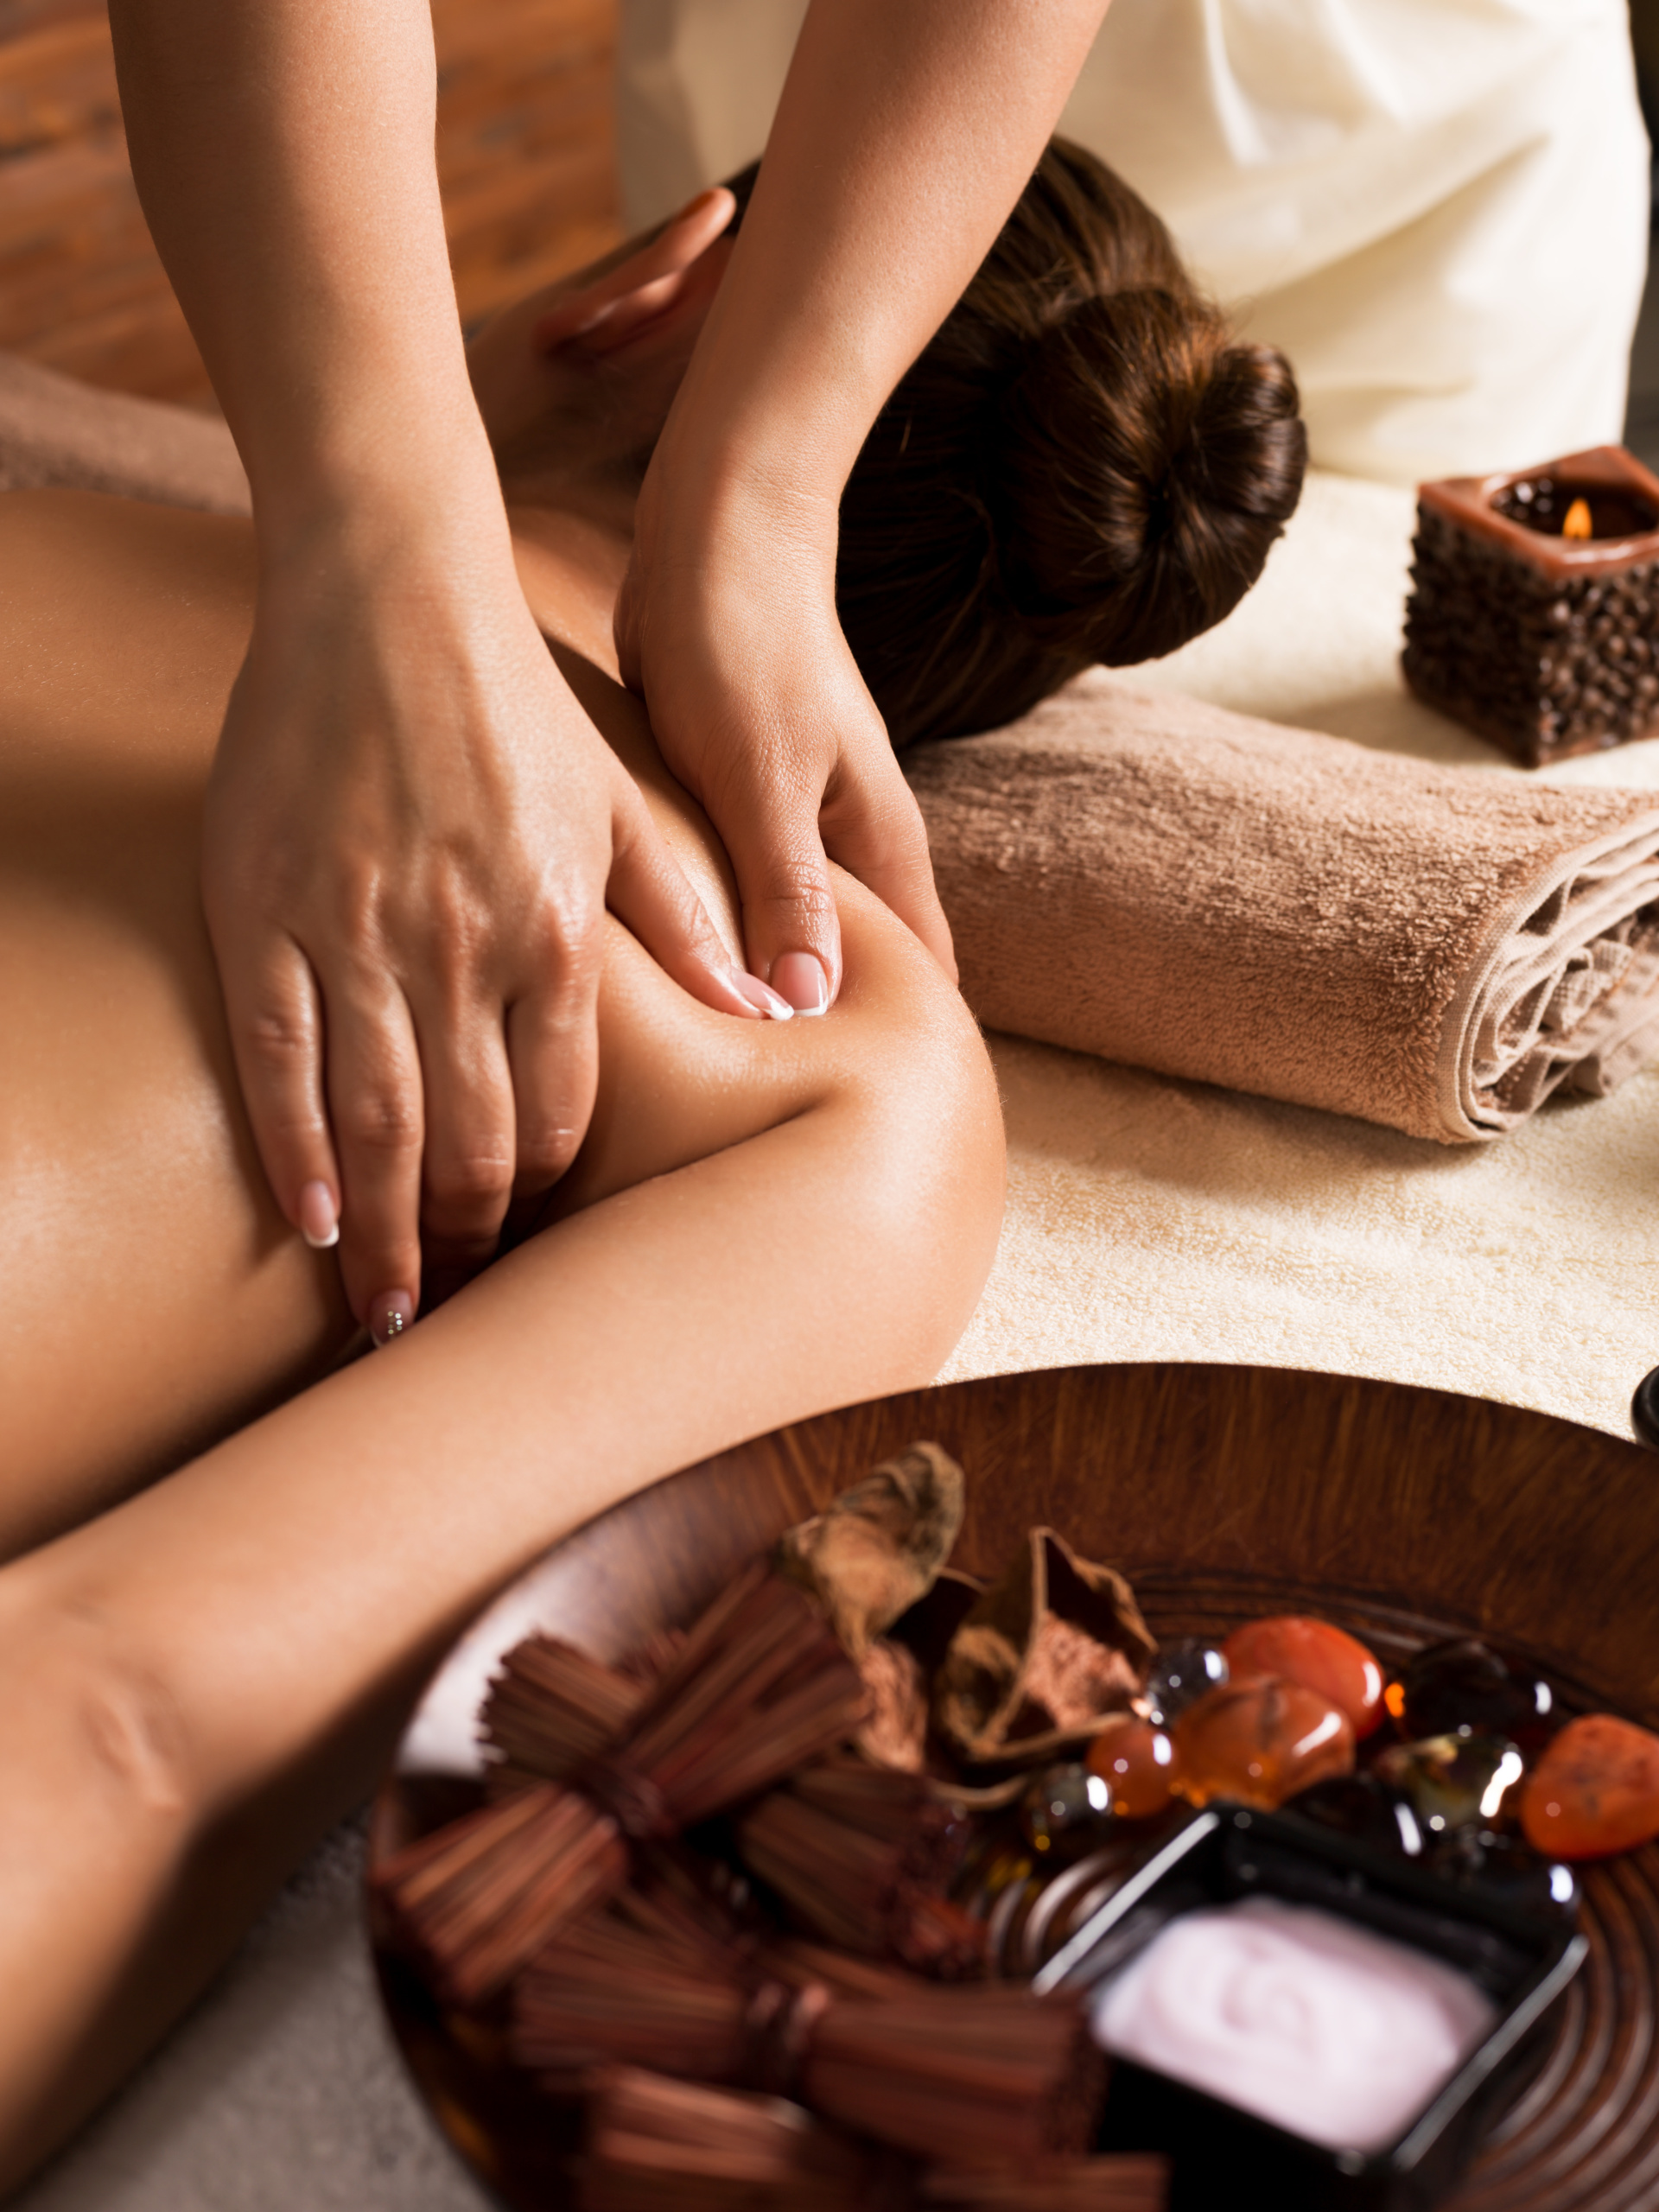 masseur-doing-massage-on-womans-back-G8MJWTU-scaled.jpg